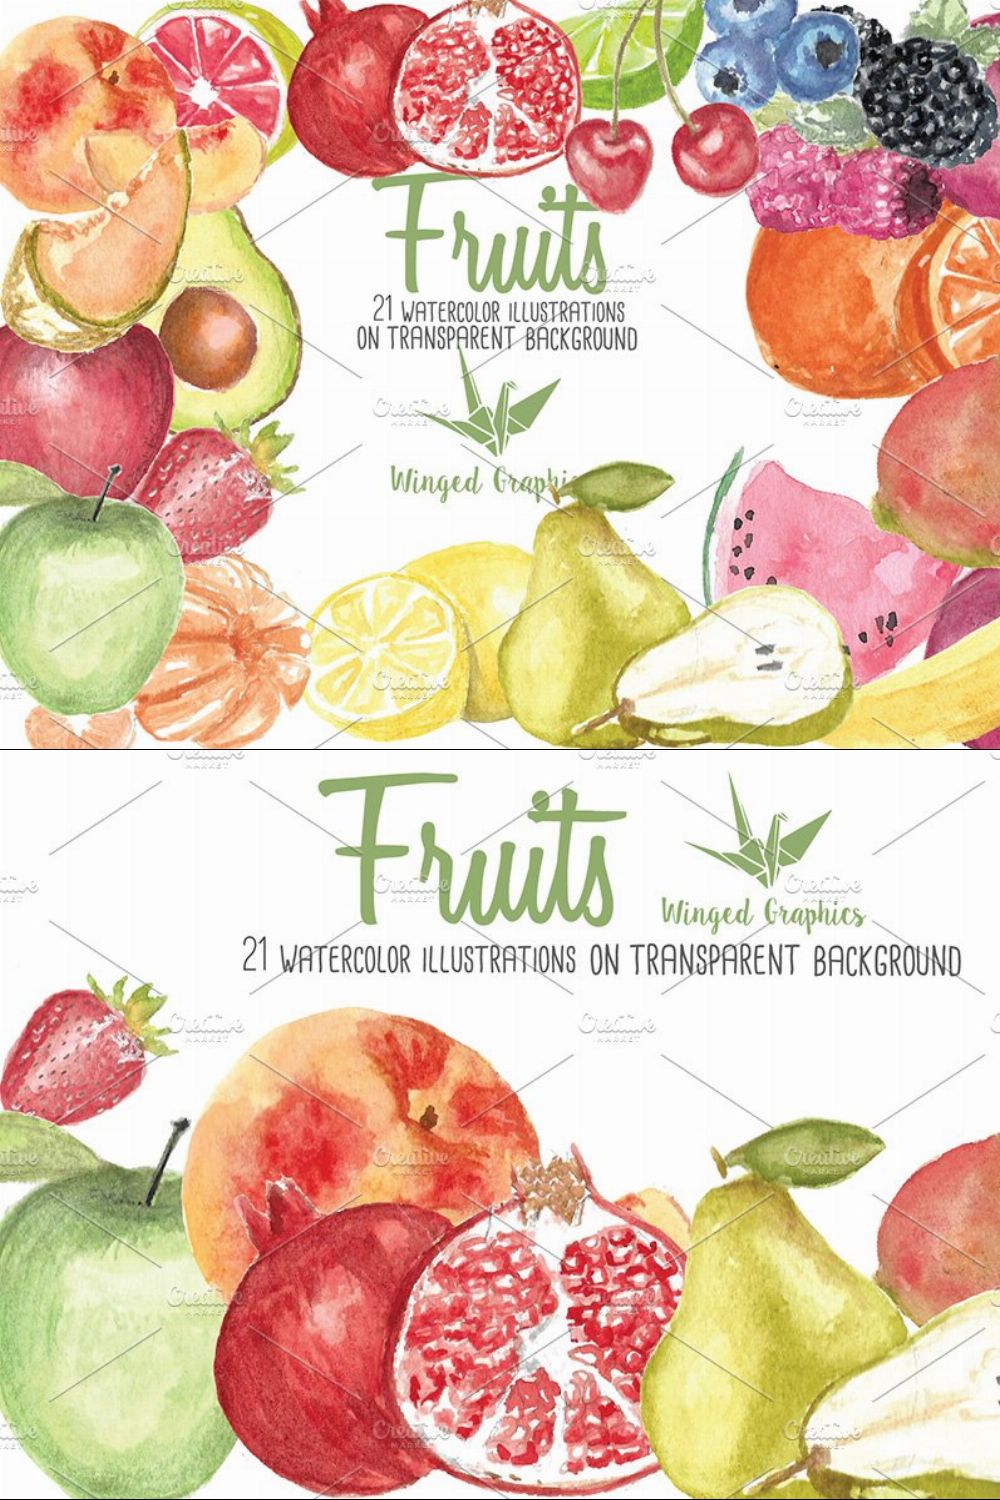 watercolor fruit illustrations pinterest preview image.